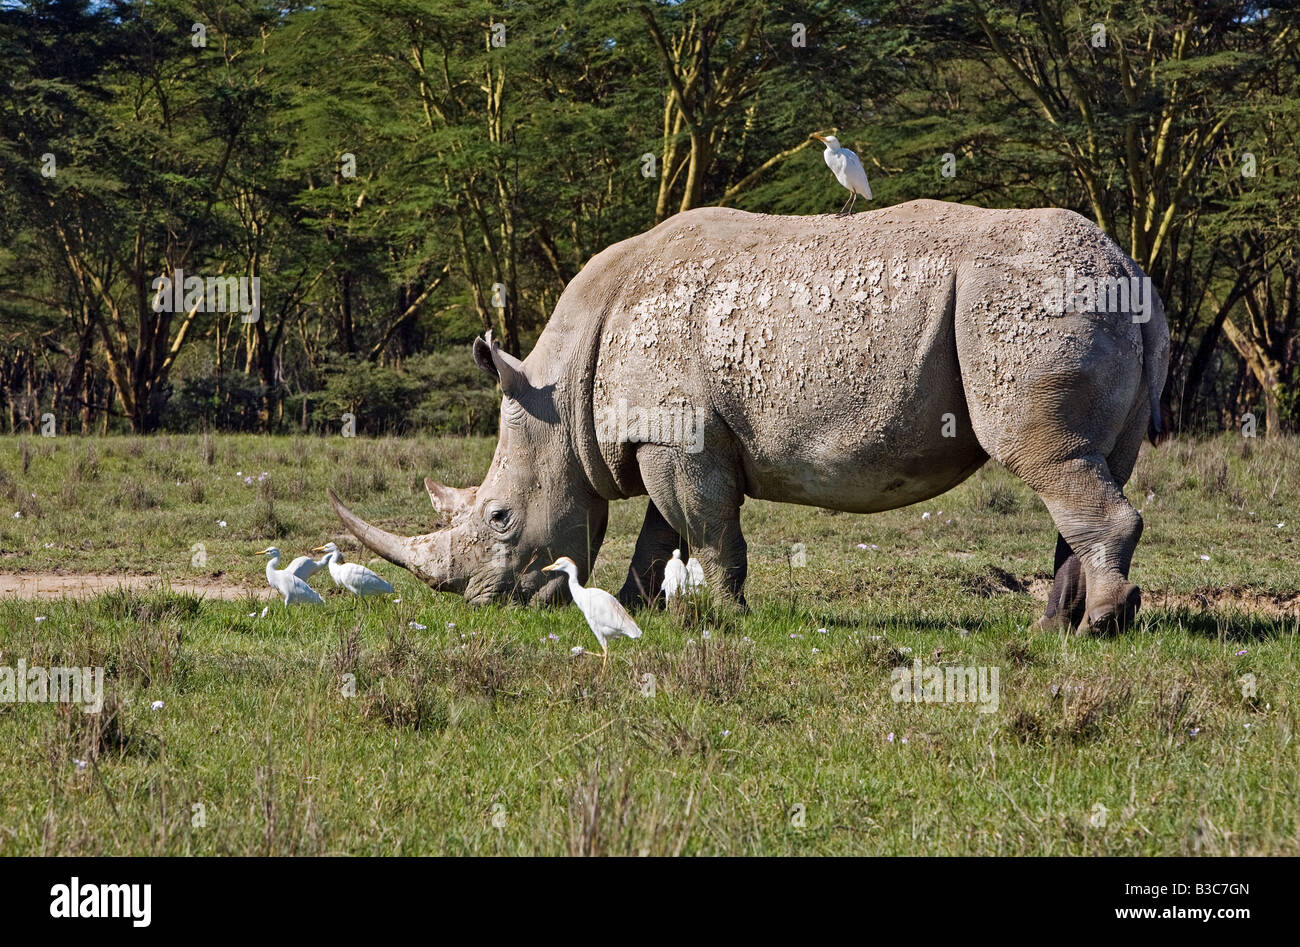 Kenya, Nakuru, Nakuru National Park. A white rhino grazes in Nakuru National Park with cattle egrets in attendance. Stock Photo